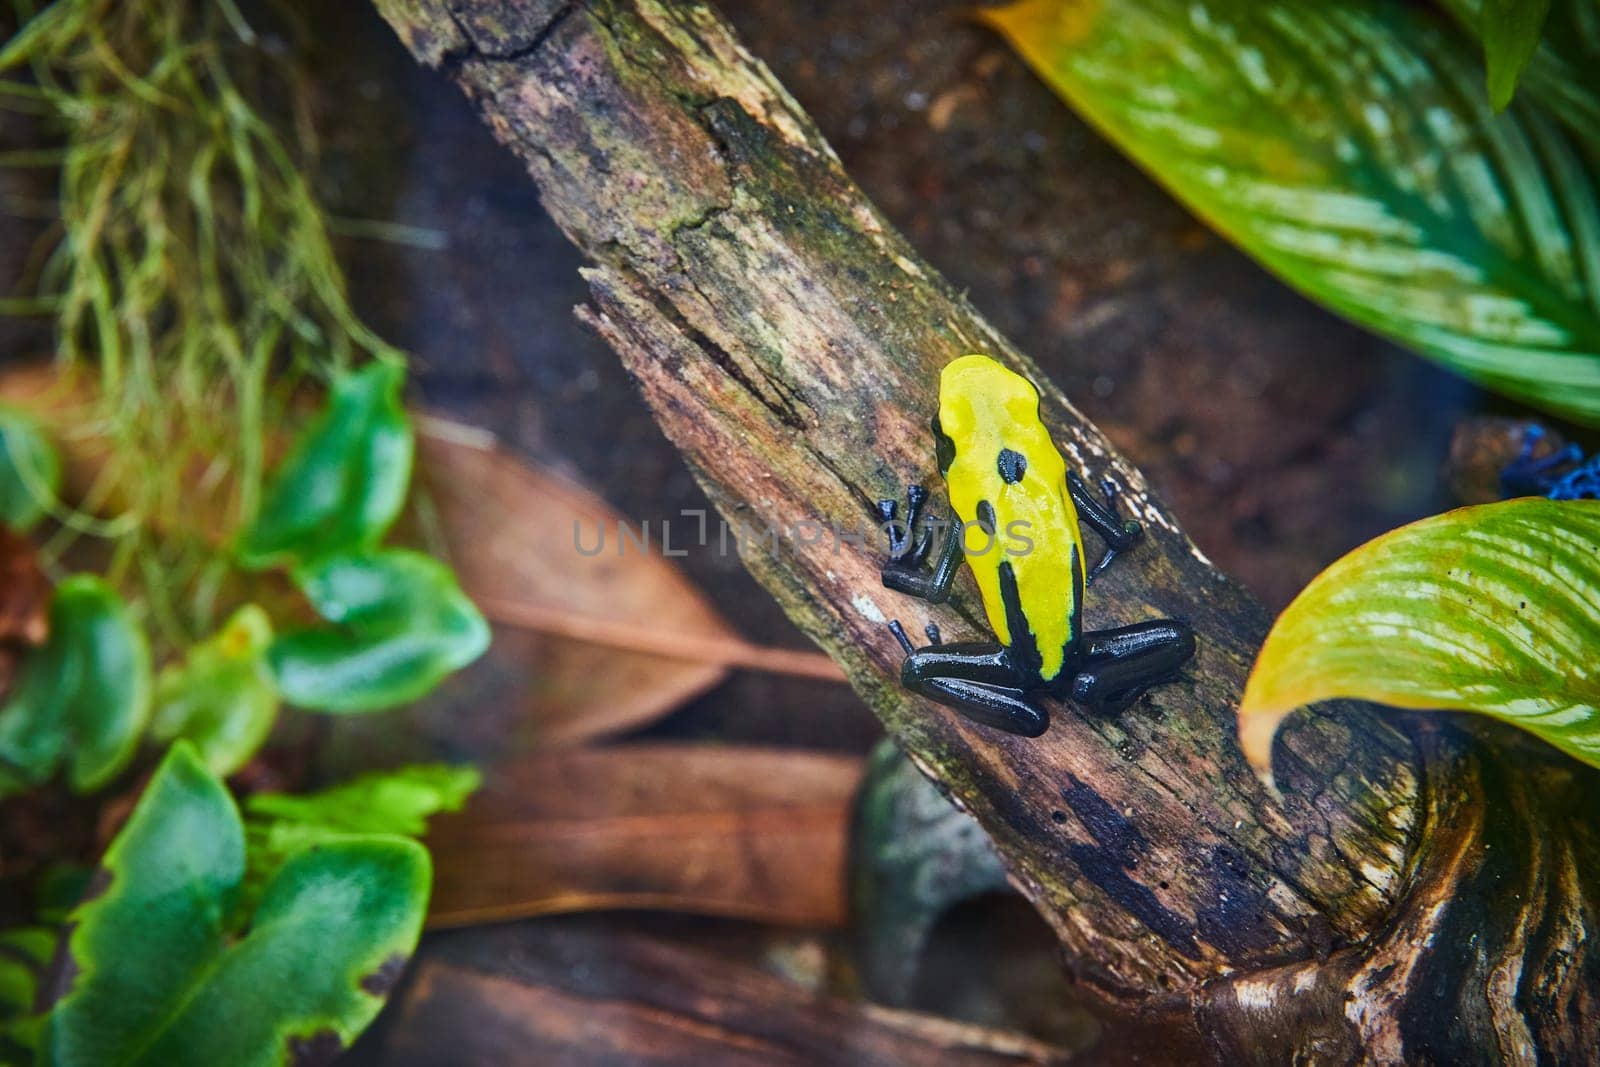 Vibrant Poison Dart Frog on Mossy Log in Rainforest Habitat by njproductions